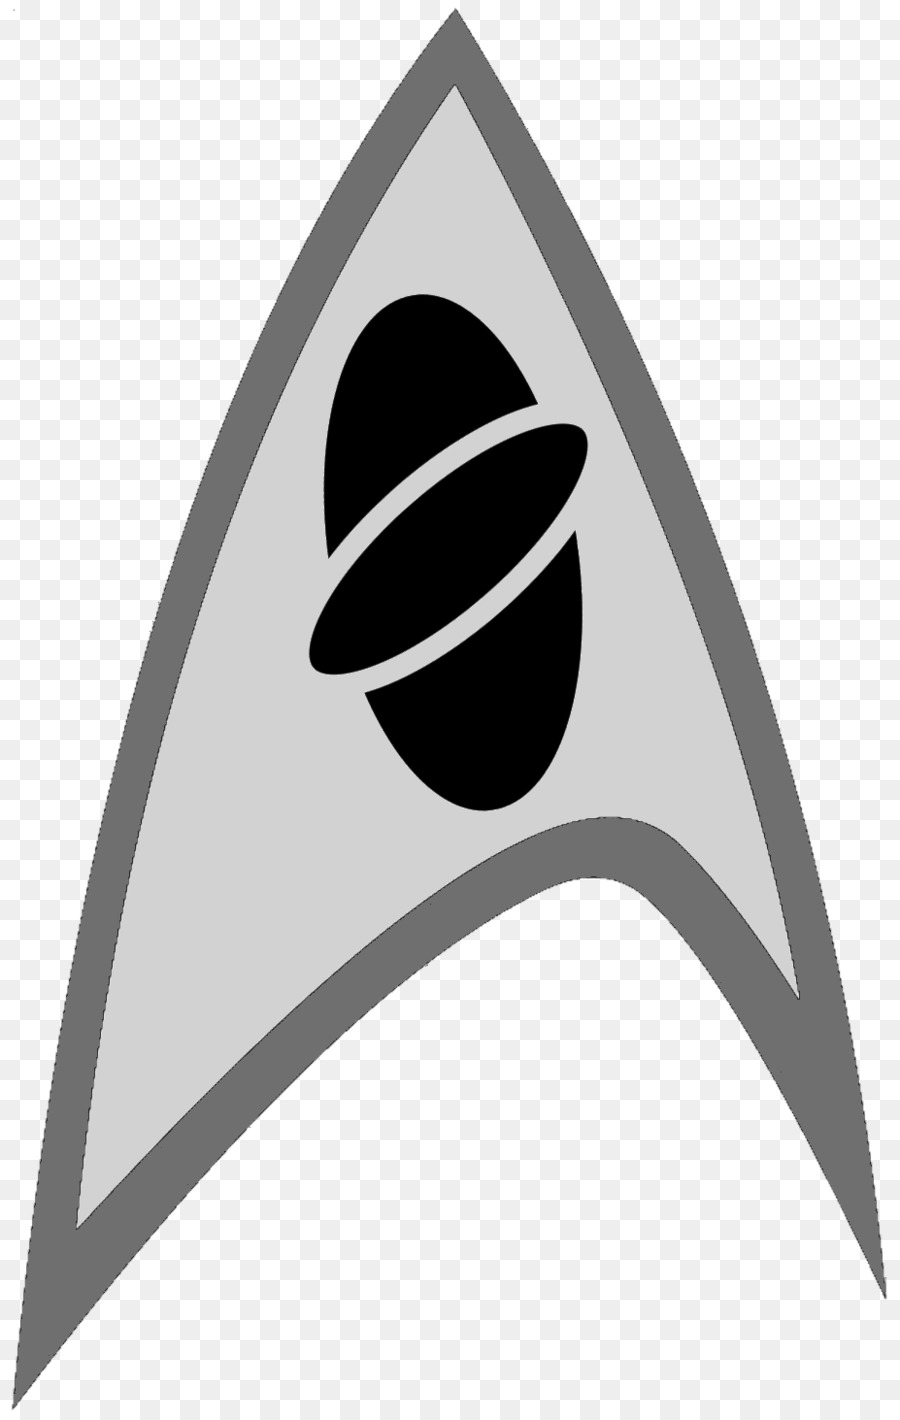 Starfleet Star Trek Science Symbol - Scientists png download - 900*1418 - Free Transparent Starfleet png Download.